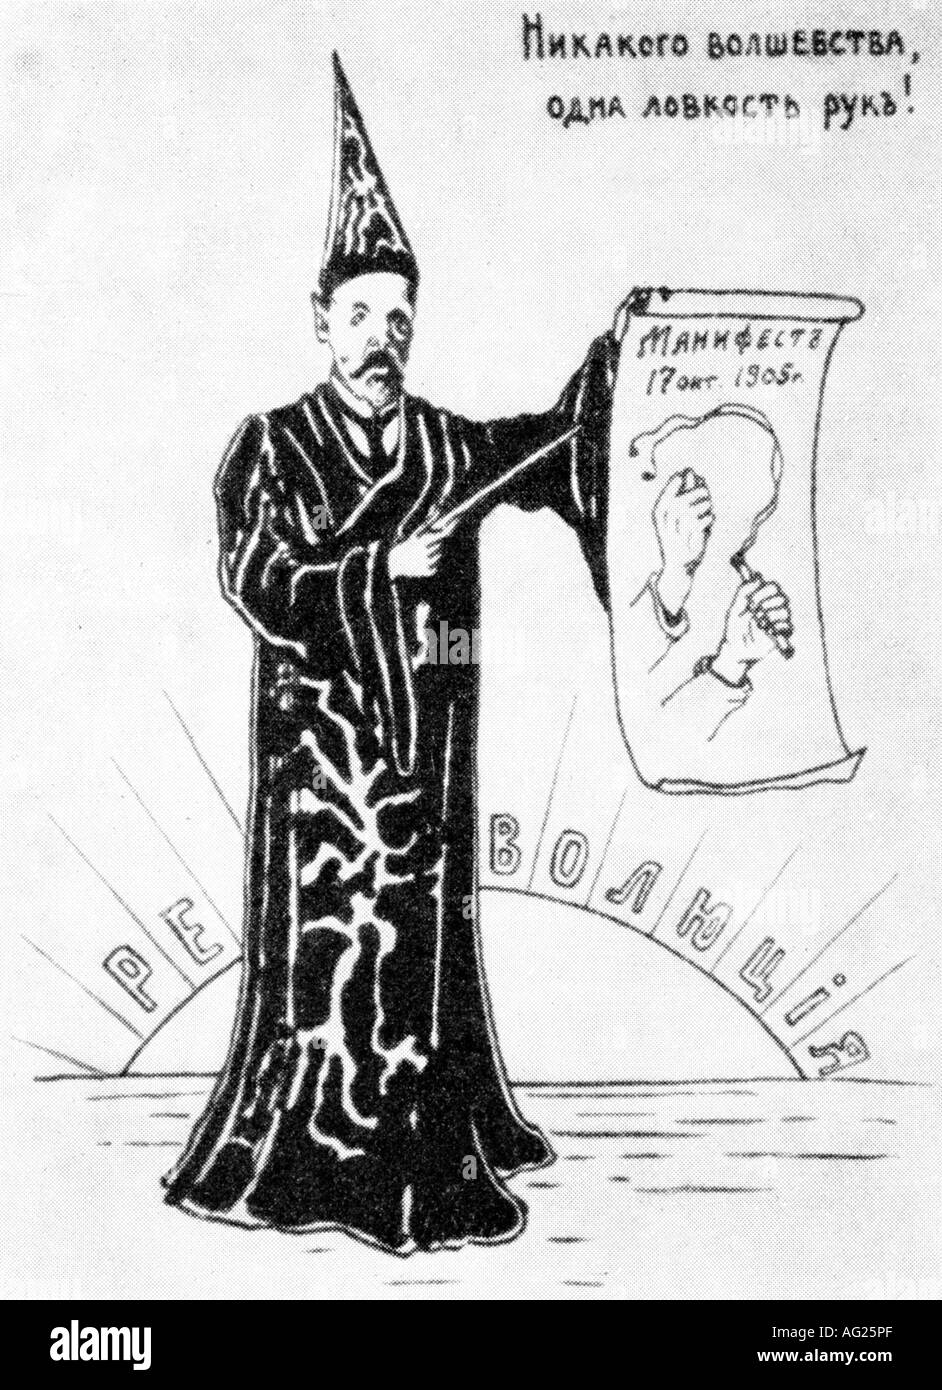 Witte, Sergei Yulyevich Count, 29.7.1849 - 13.3.1915, Russian politician, caricature, October Manifesto, drawing by M. M. Chemodanov, 1905, Russia, politics, revolution, , Stock Photo